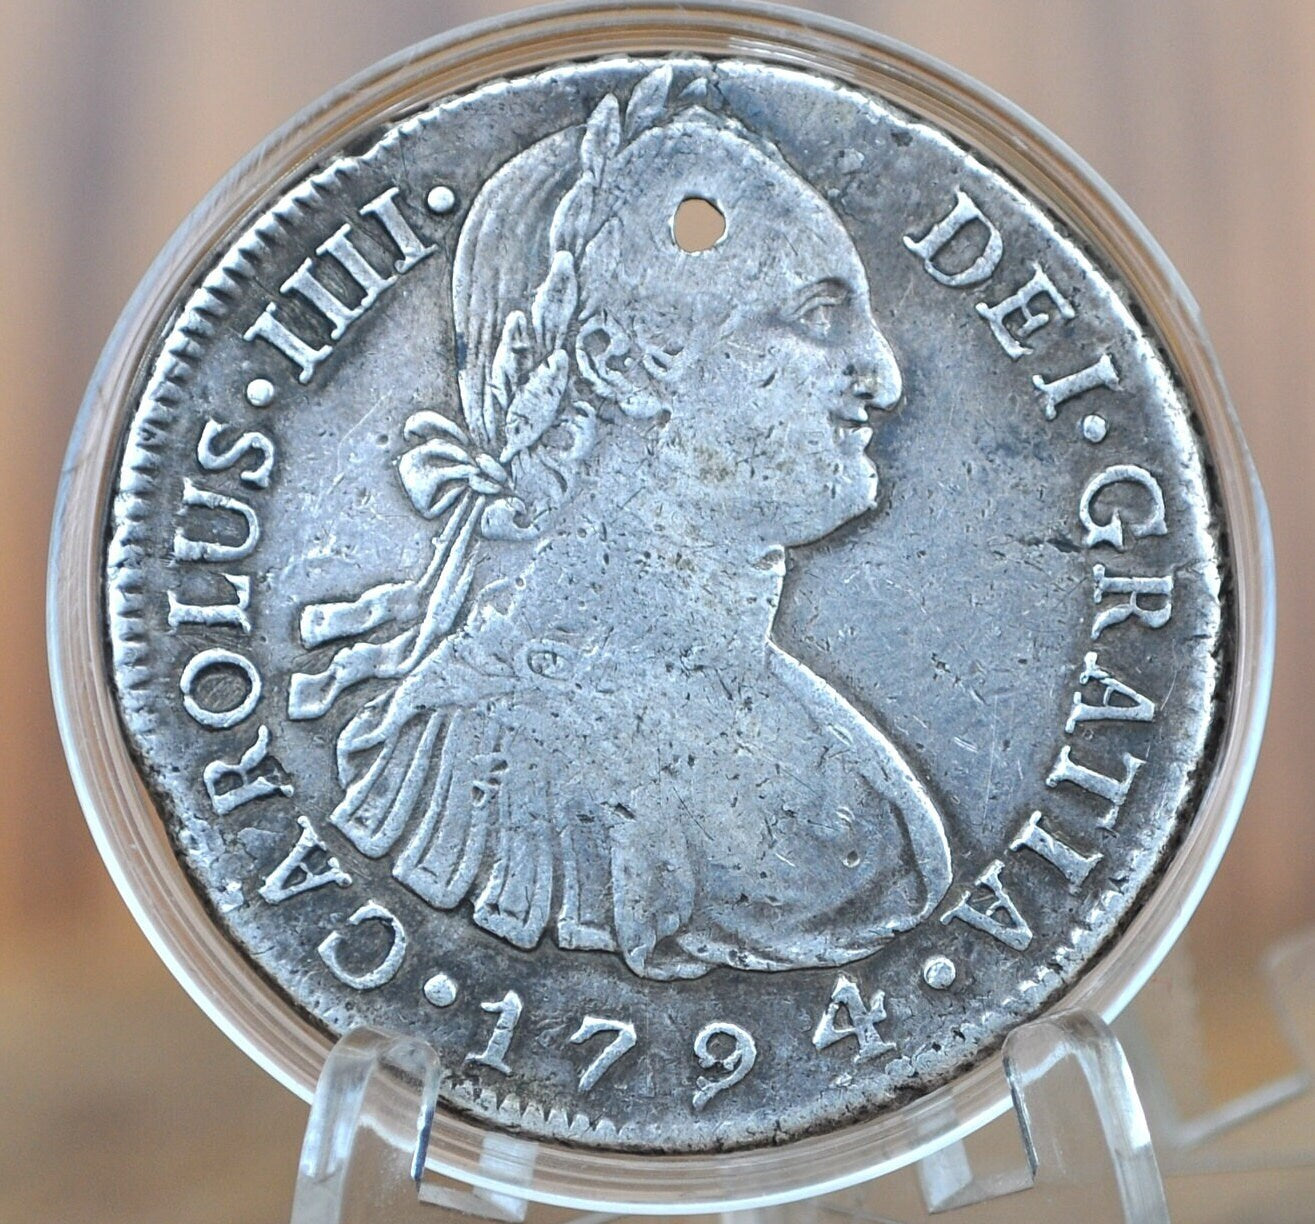 1794 IJ Spanish 8 Reales, Peru - XF Detail, Holed - Spanish Silver Colonial Era Coin - 1794 Eight Reales - Carolus Iiii - Spanish Peru